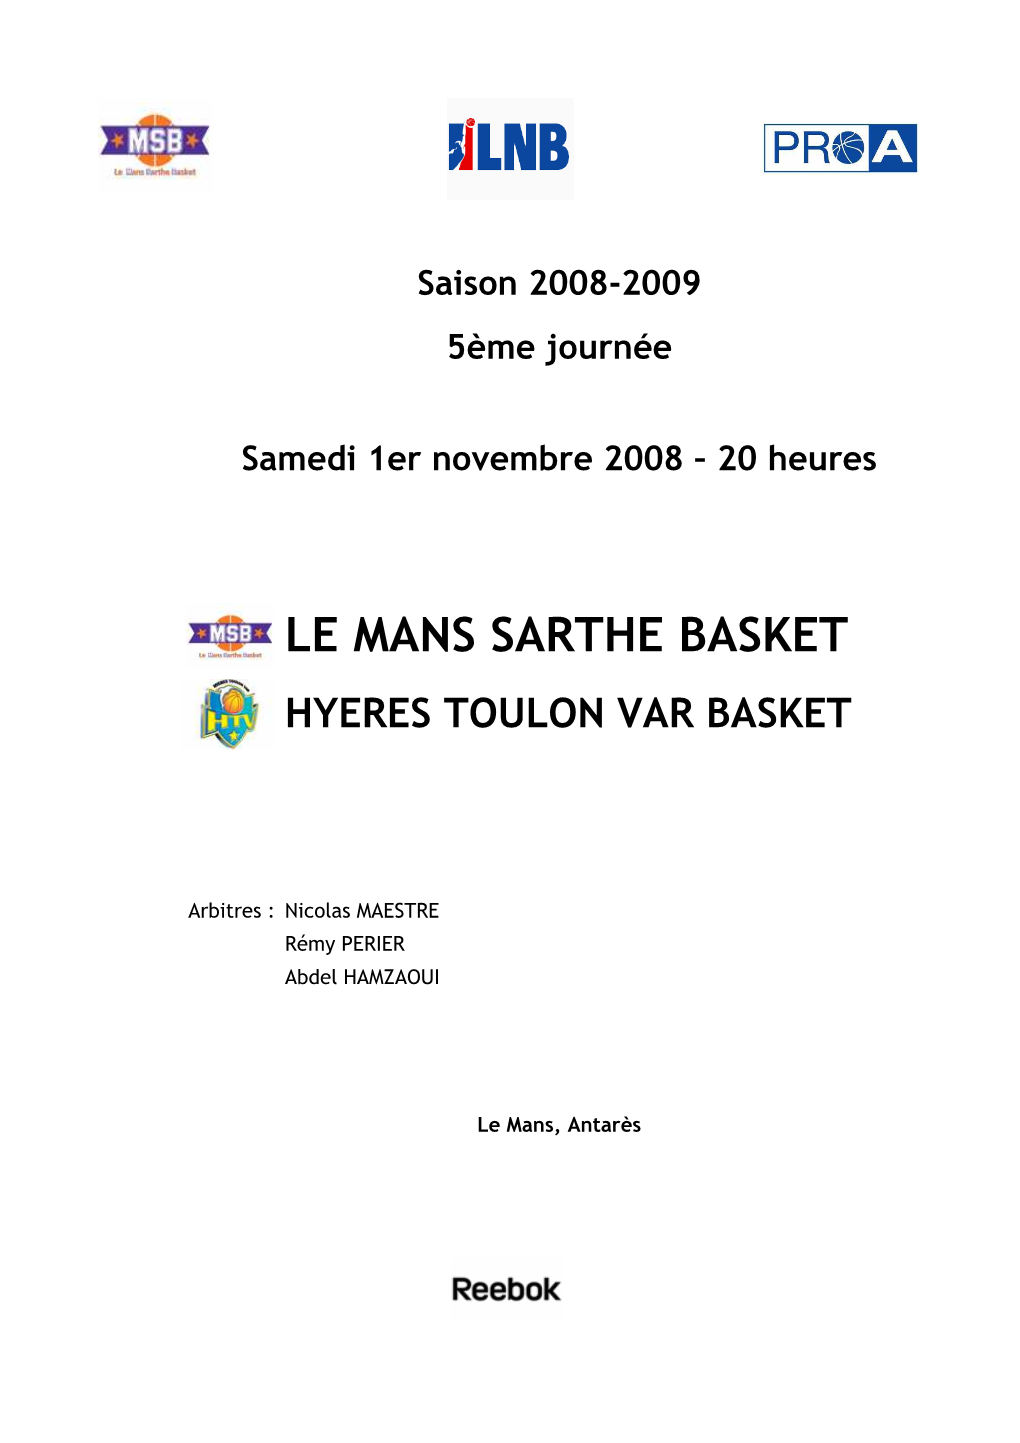 Le Mans Sarthe Basket Hyeres Toulon Var Basket